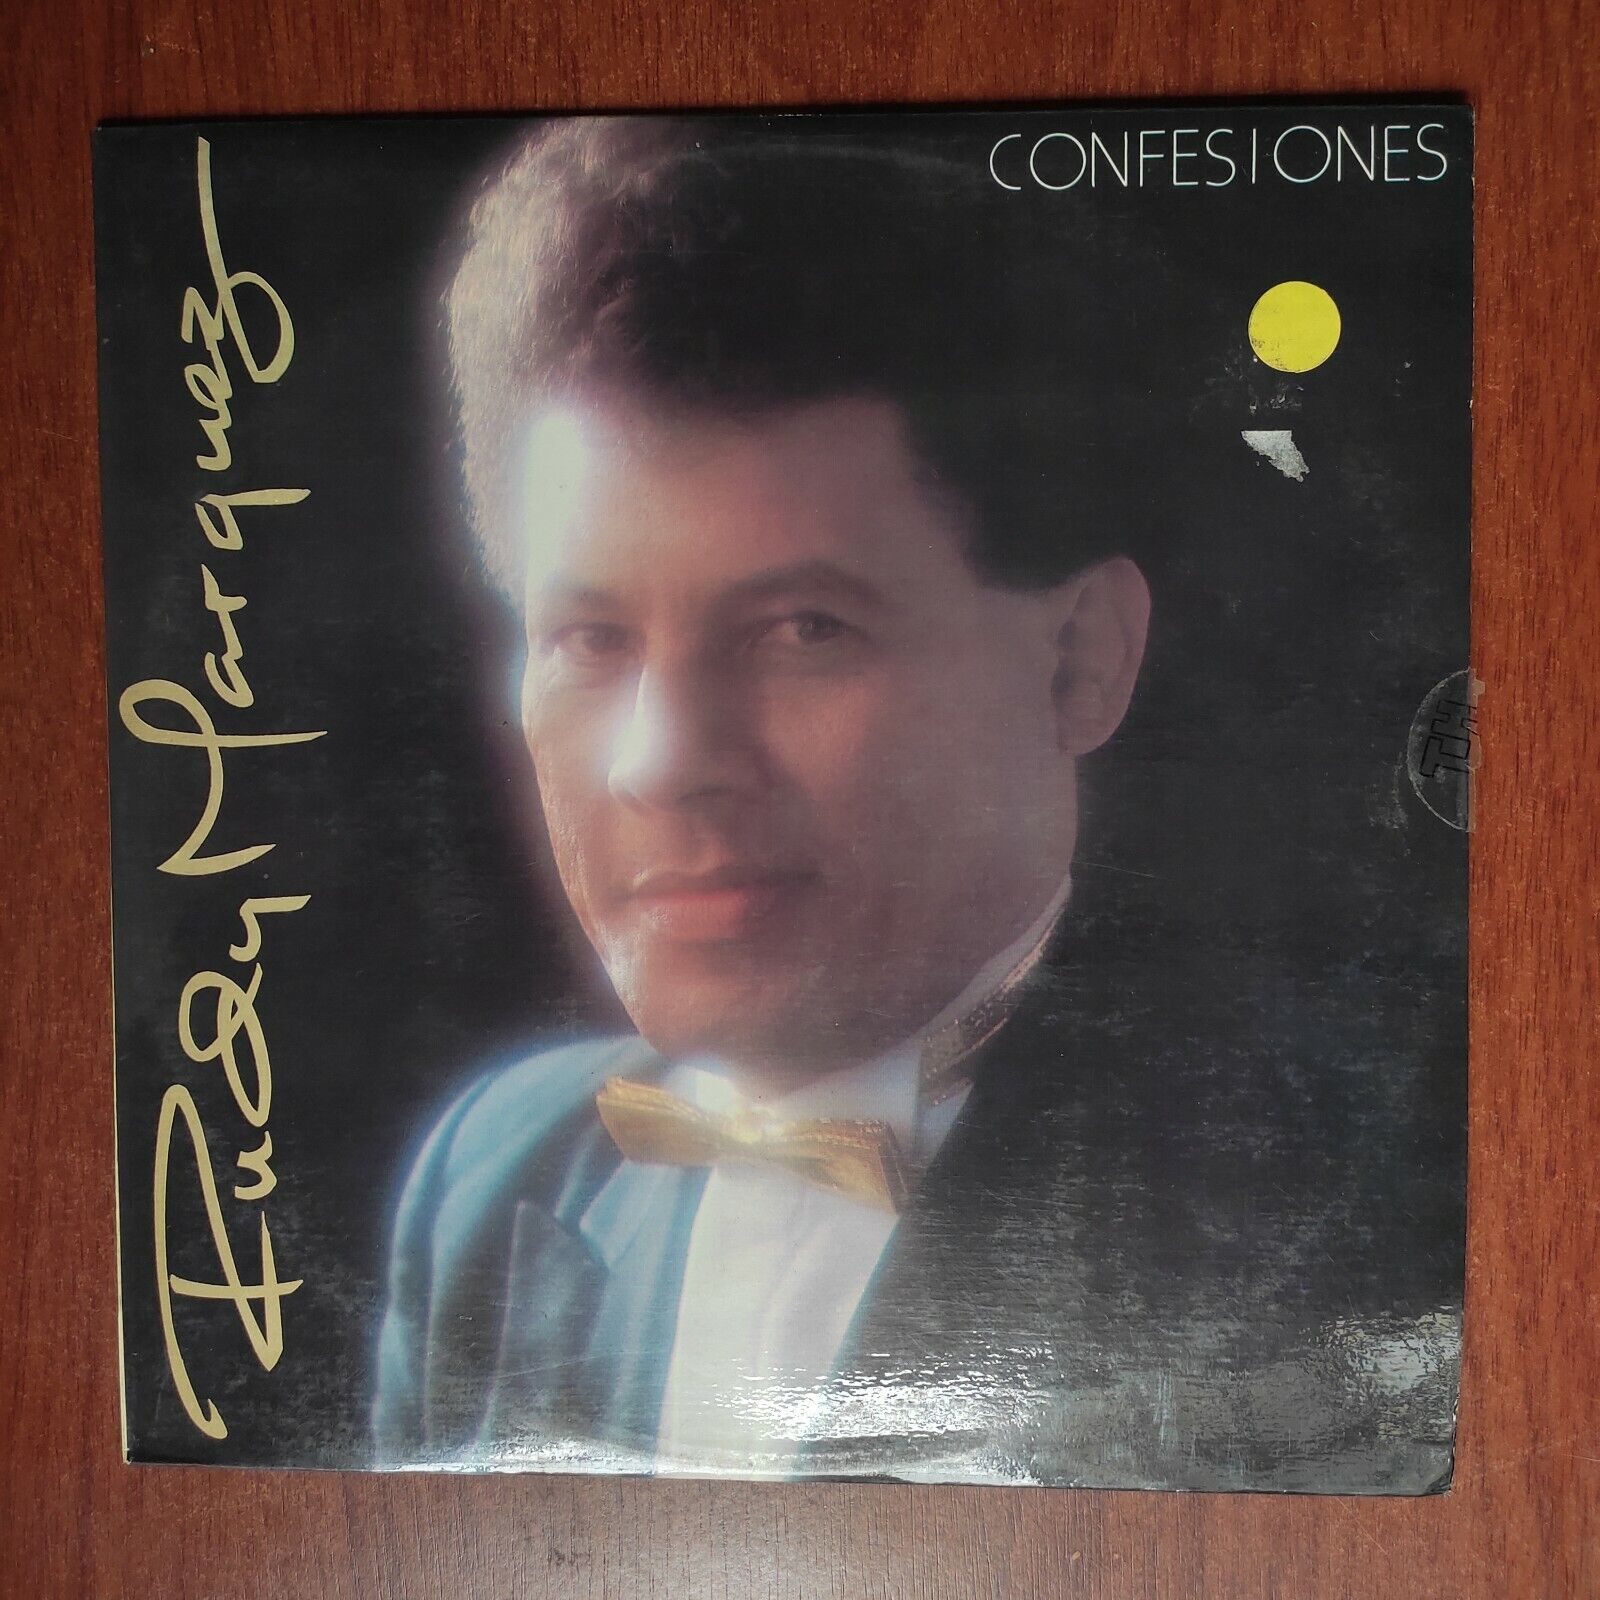 Rudy Marquez – Confesiones [1988] Vinyl LP Latin Pop Ballad Vocal Romantic